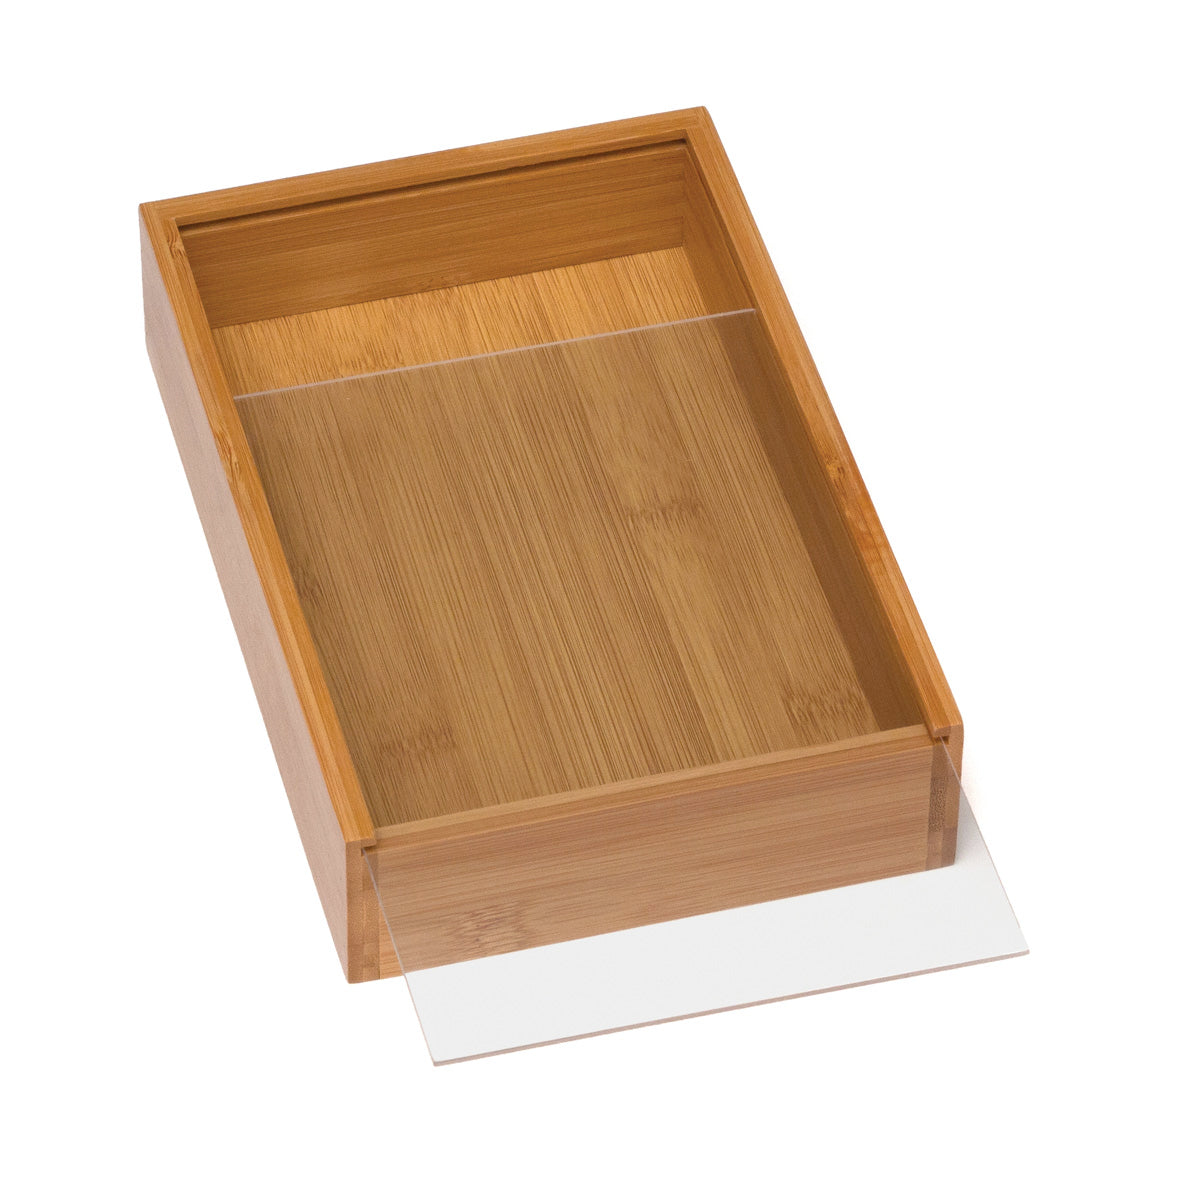 Organization Box with Sliding Acrylic Cover